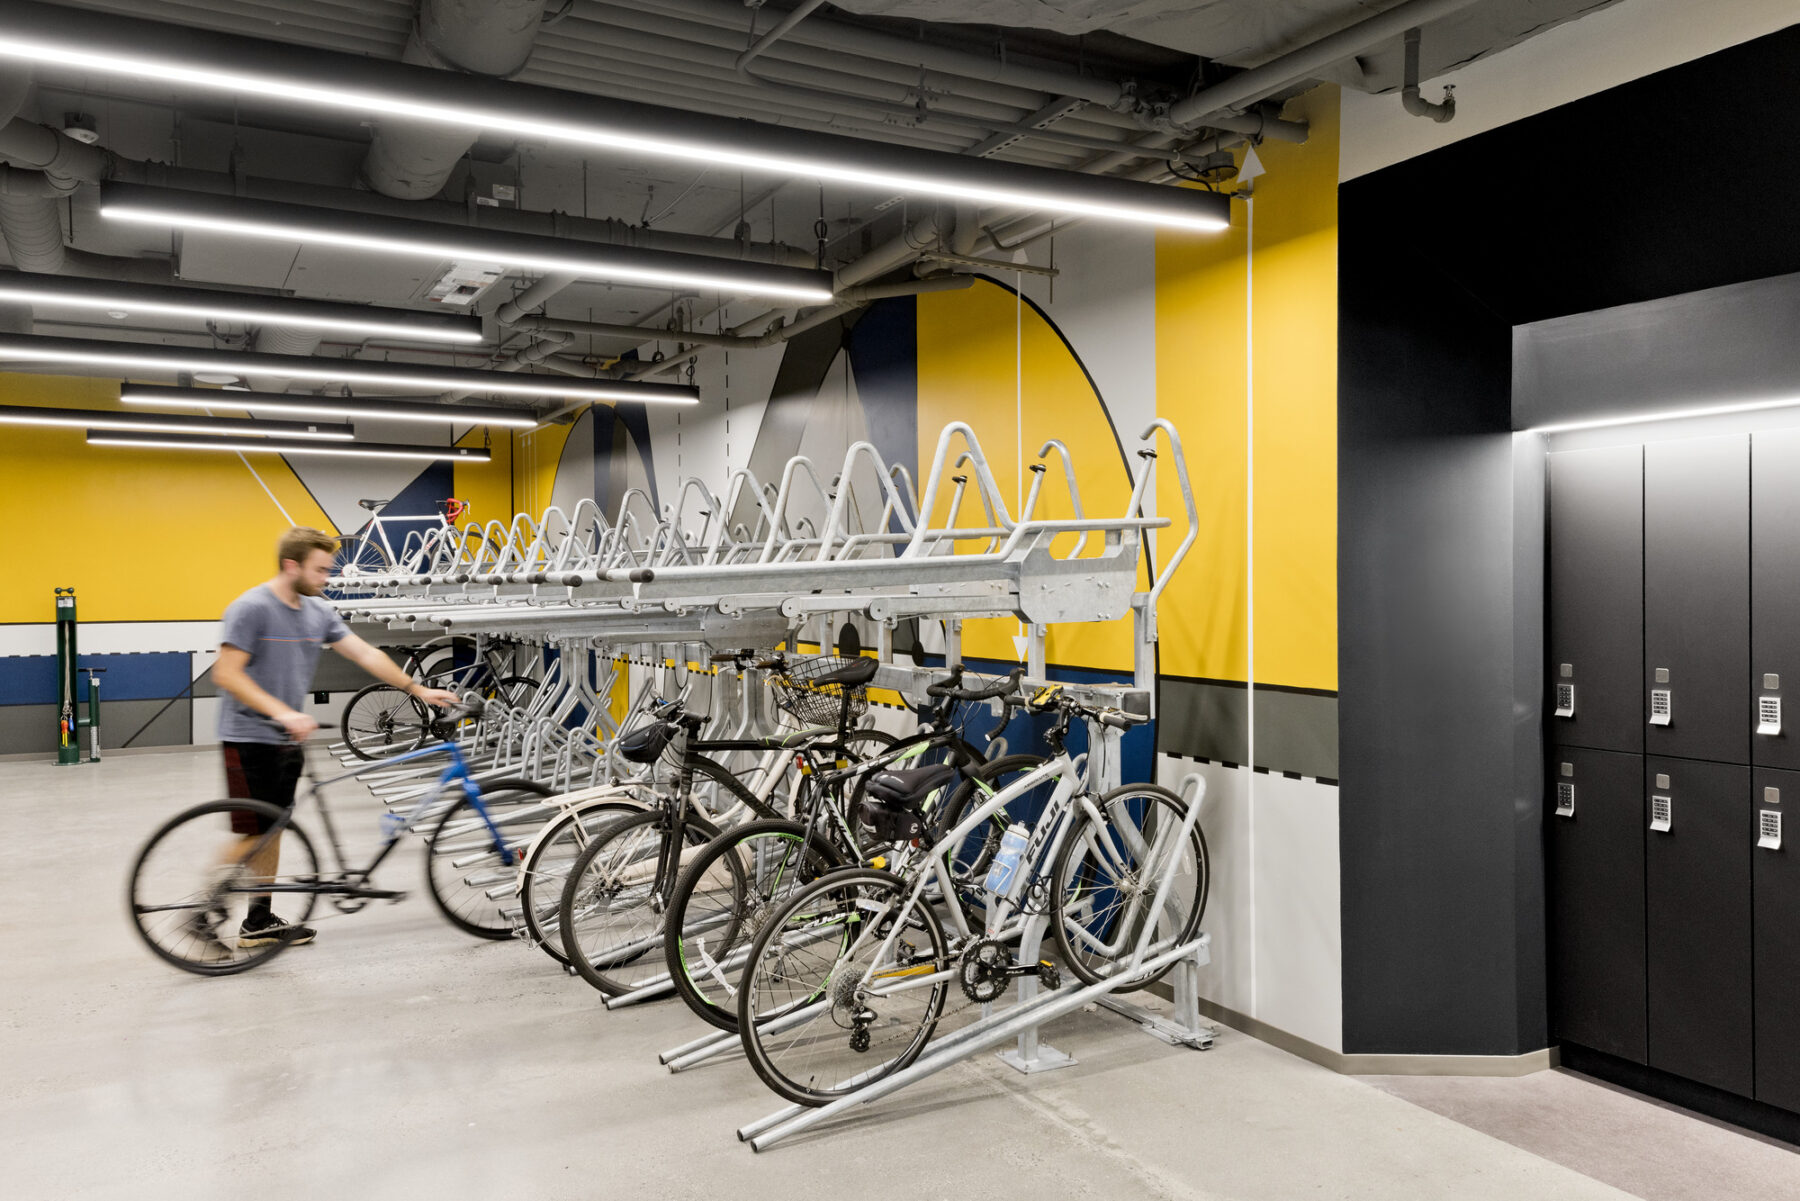 Bike room with racks and individual parking their bike